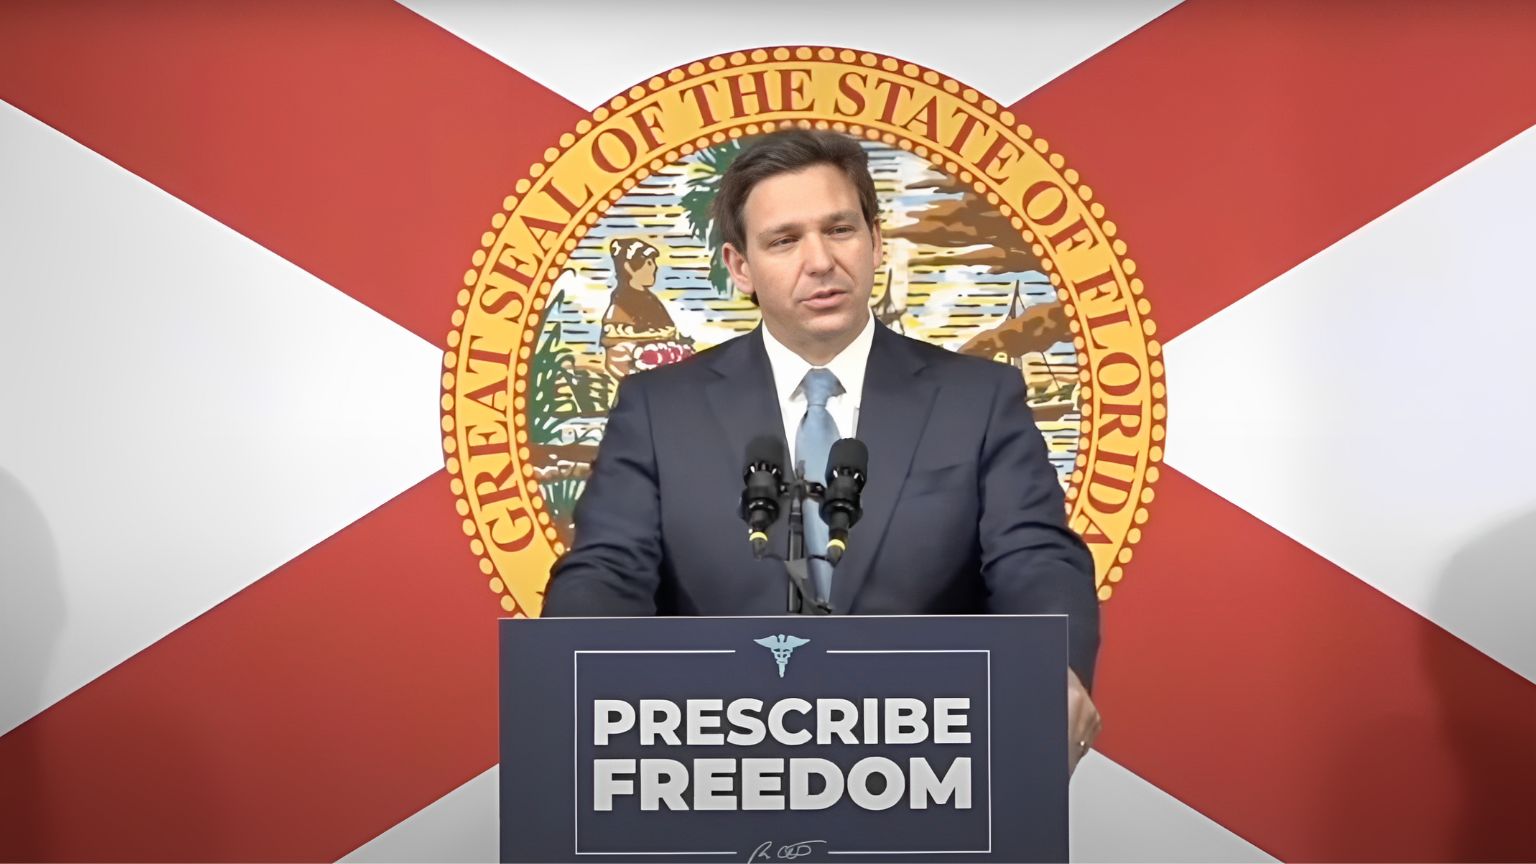 Florida Governor Ron DeSantis’ “Prescribe Freedom” plan bans vaccine passports, supports doctors’ free speech